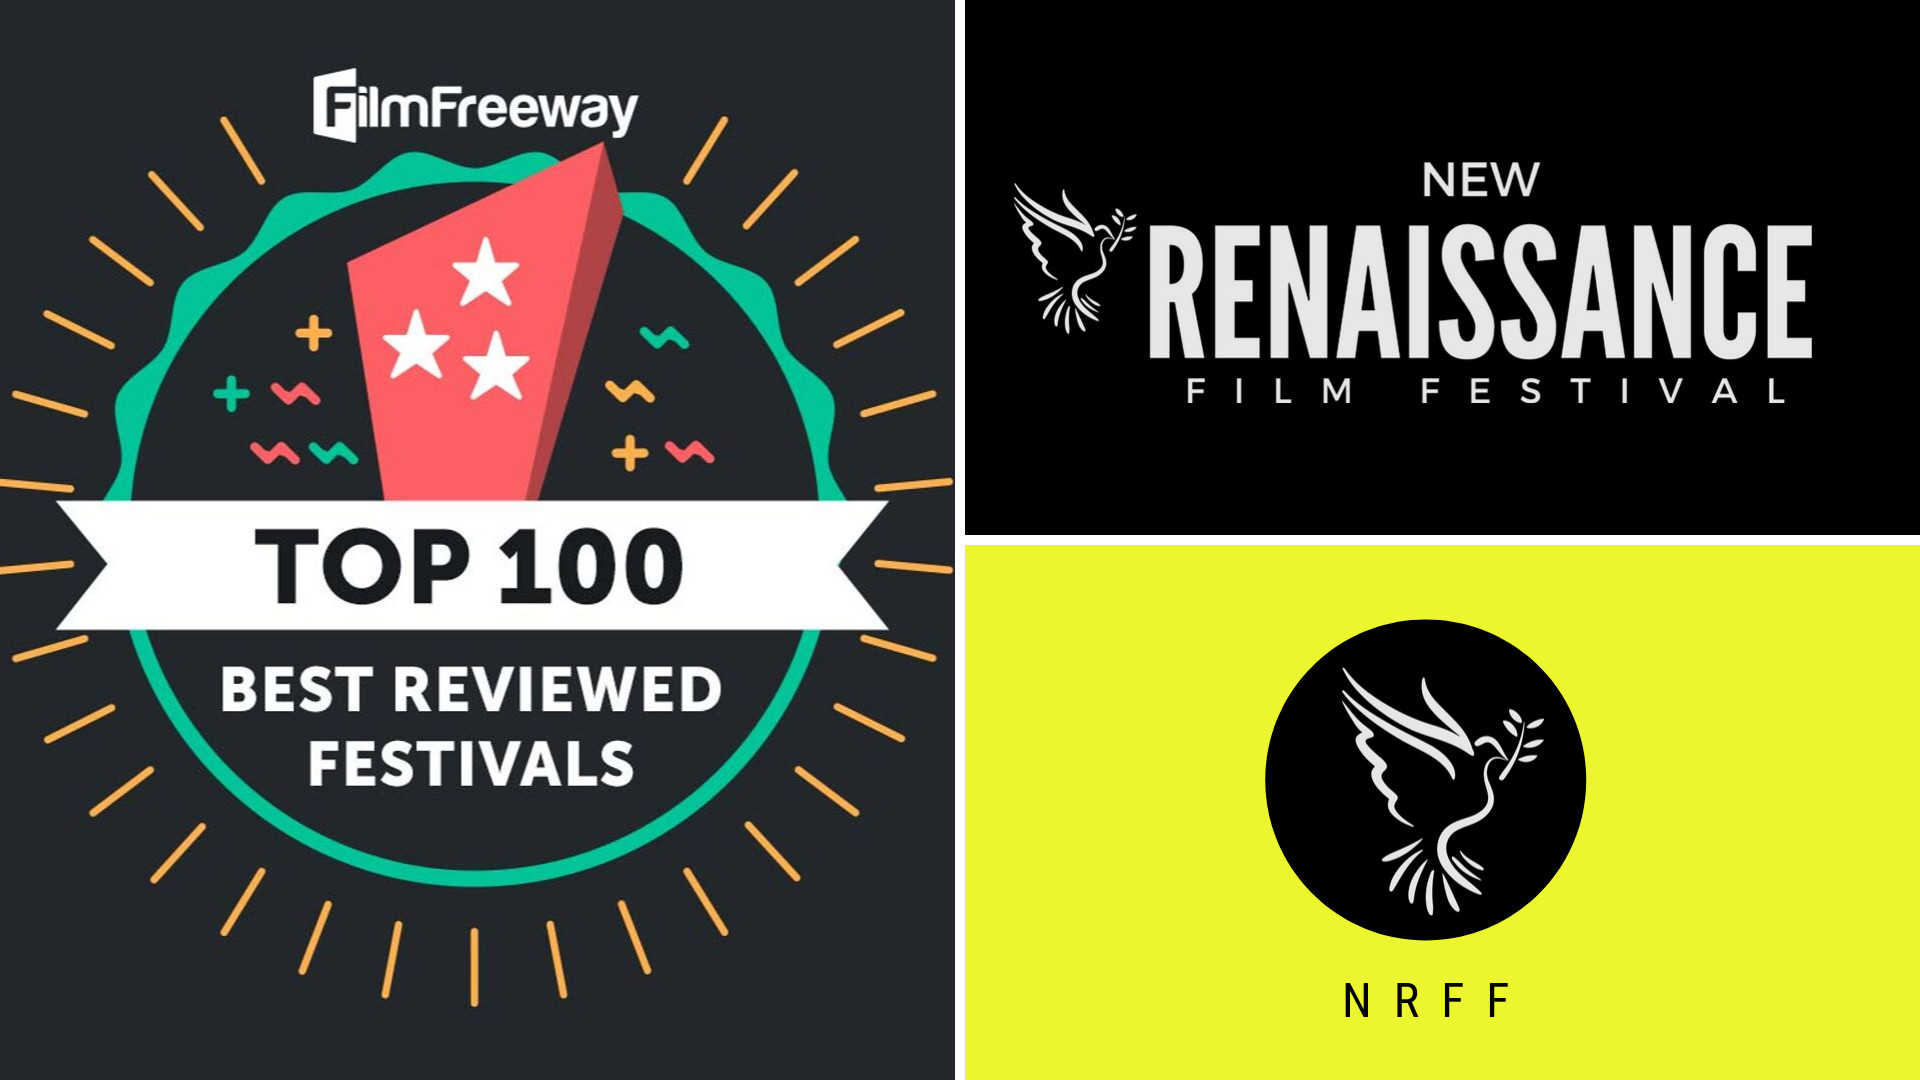 Top 100 best reviewed festivals